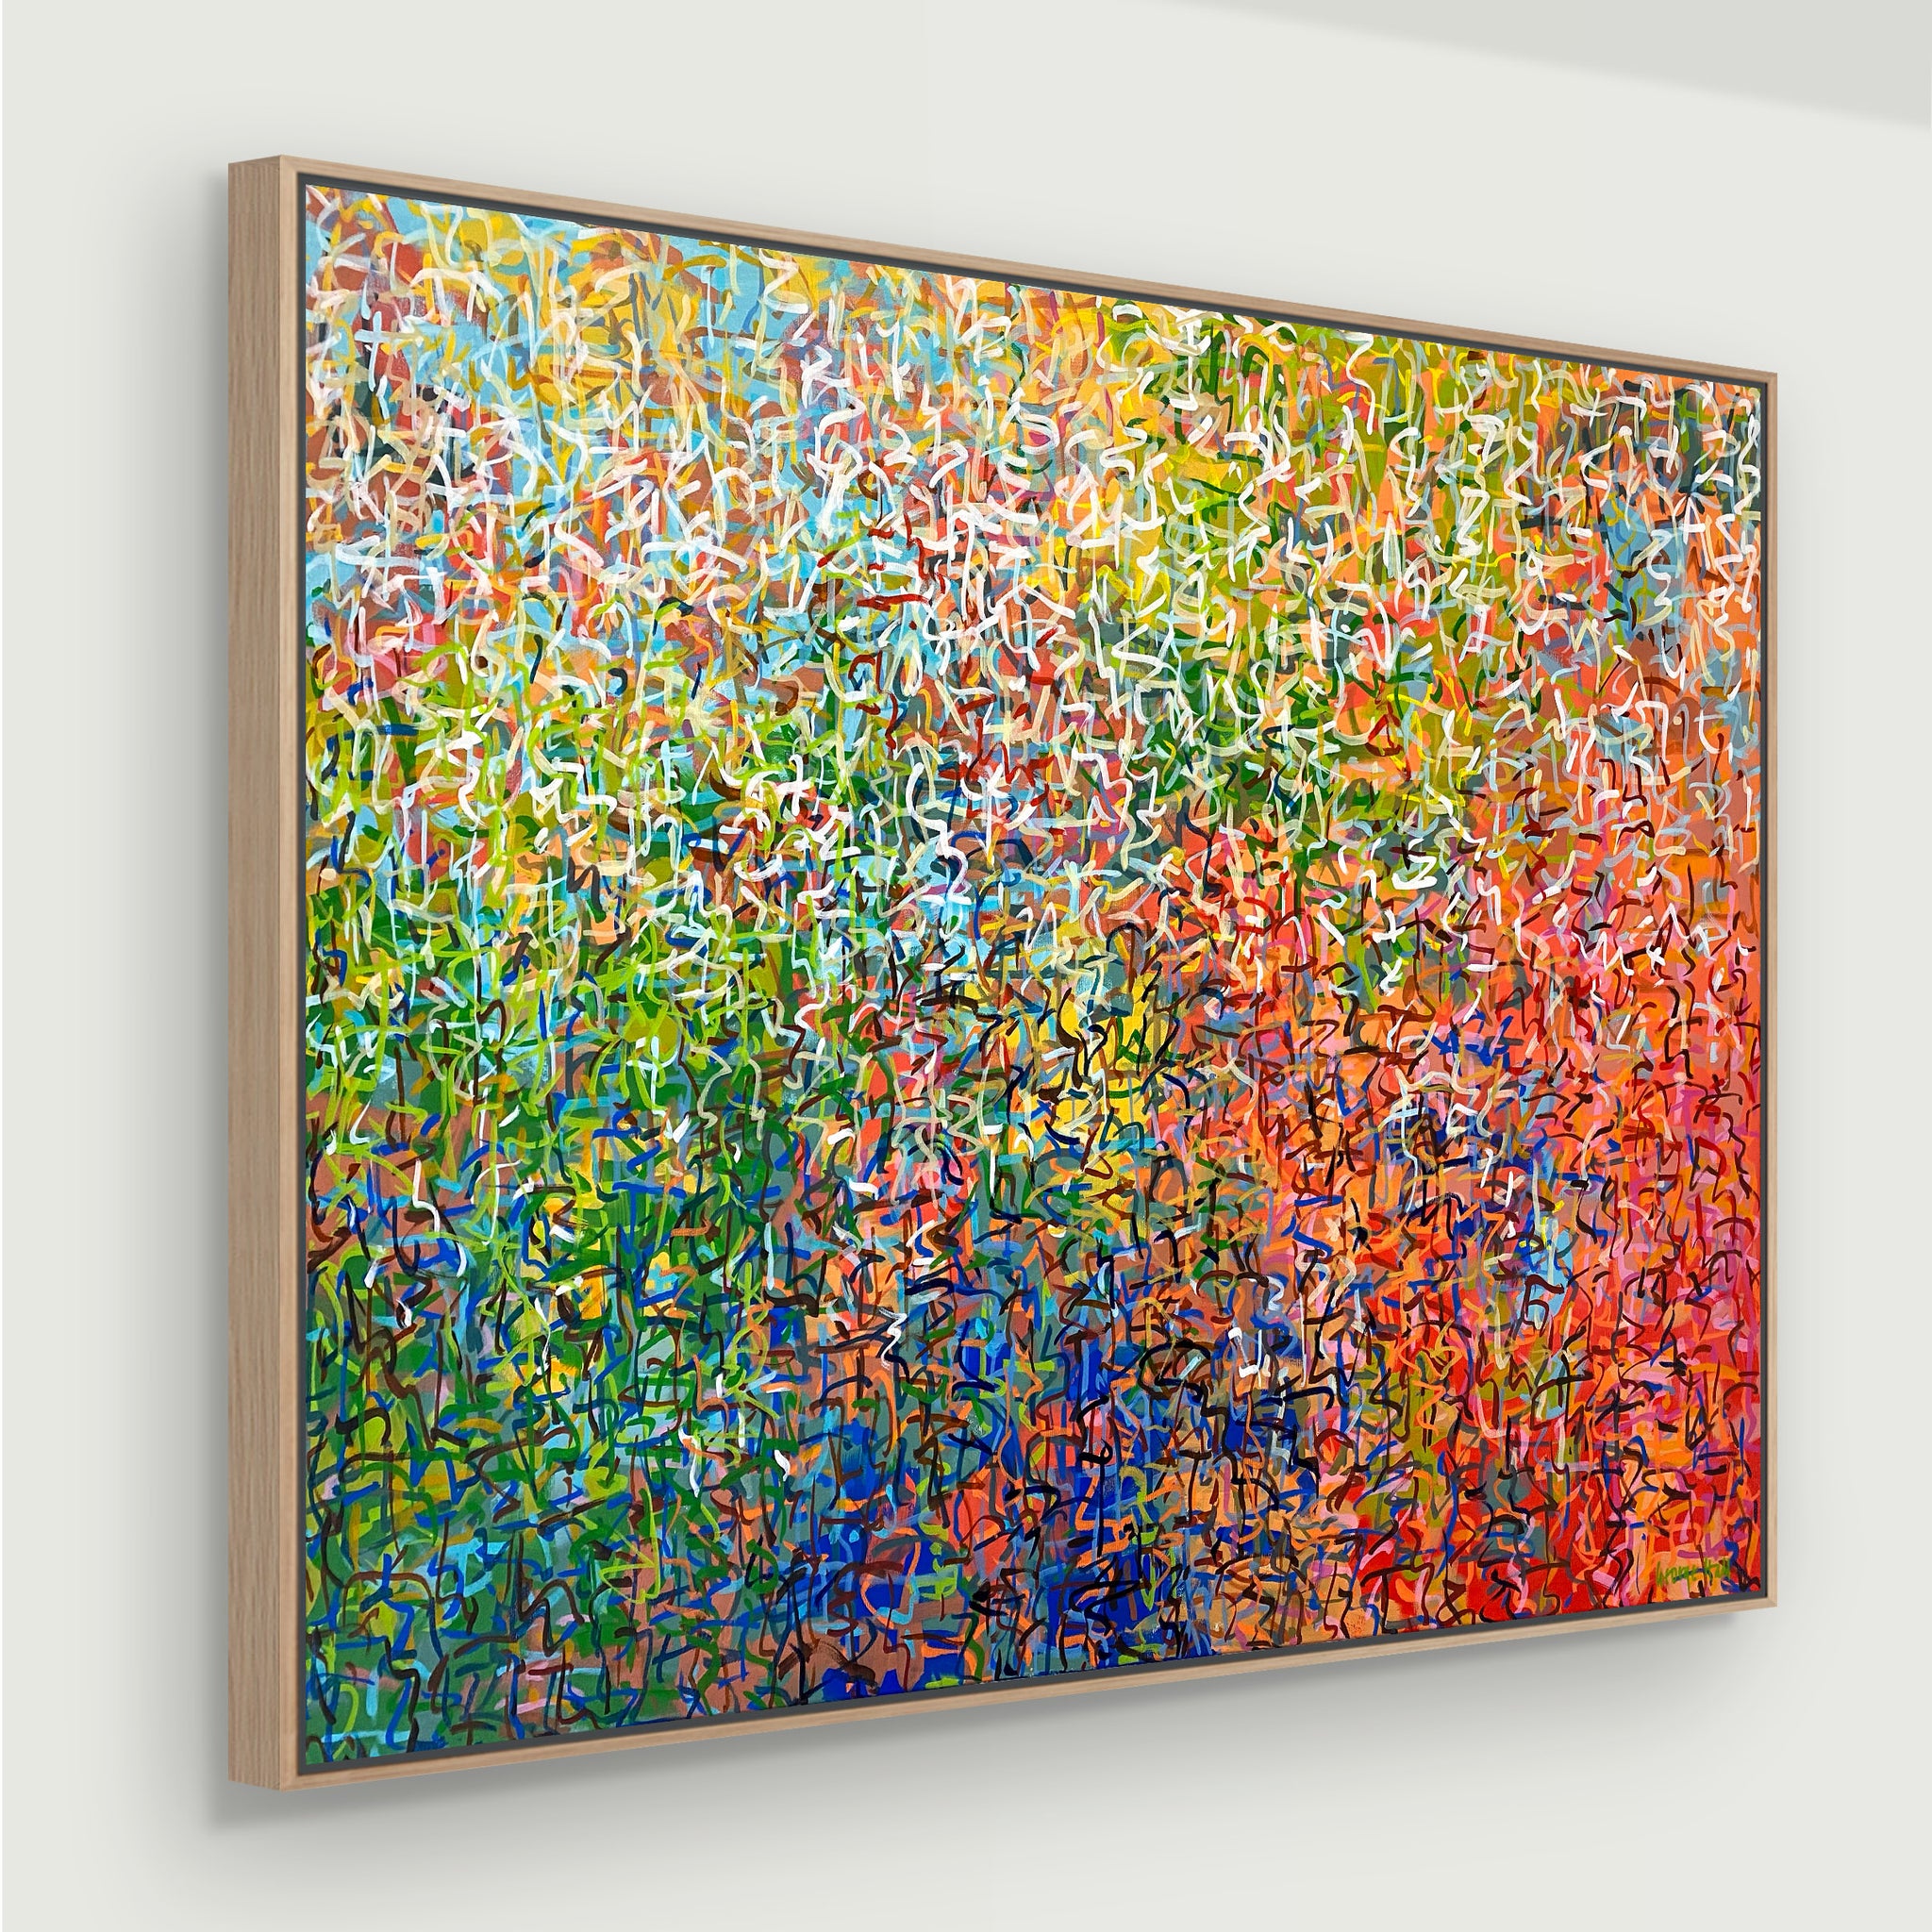 Hippie Trippy - Framed - 123 x 93cm - acrylic on canvas